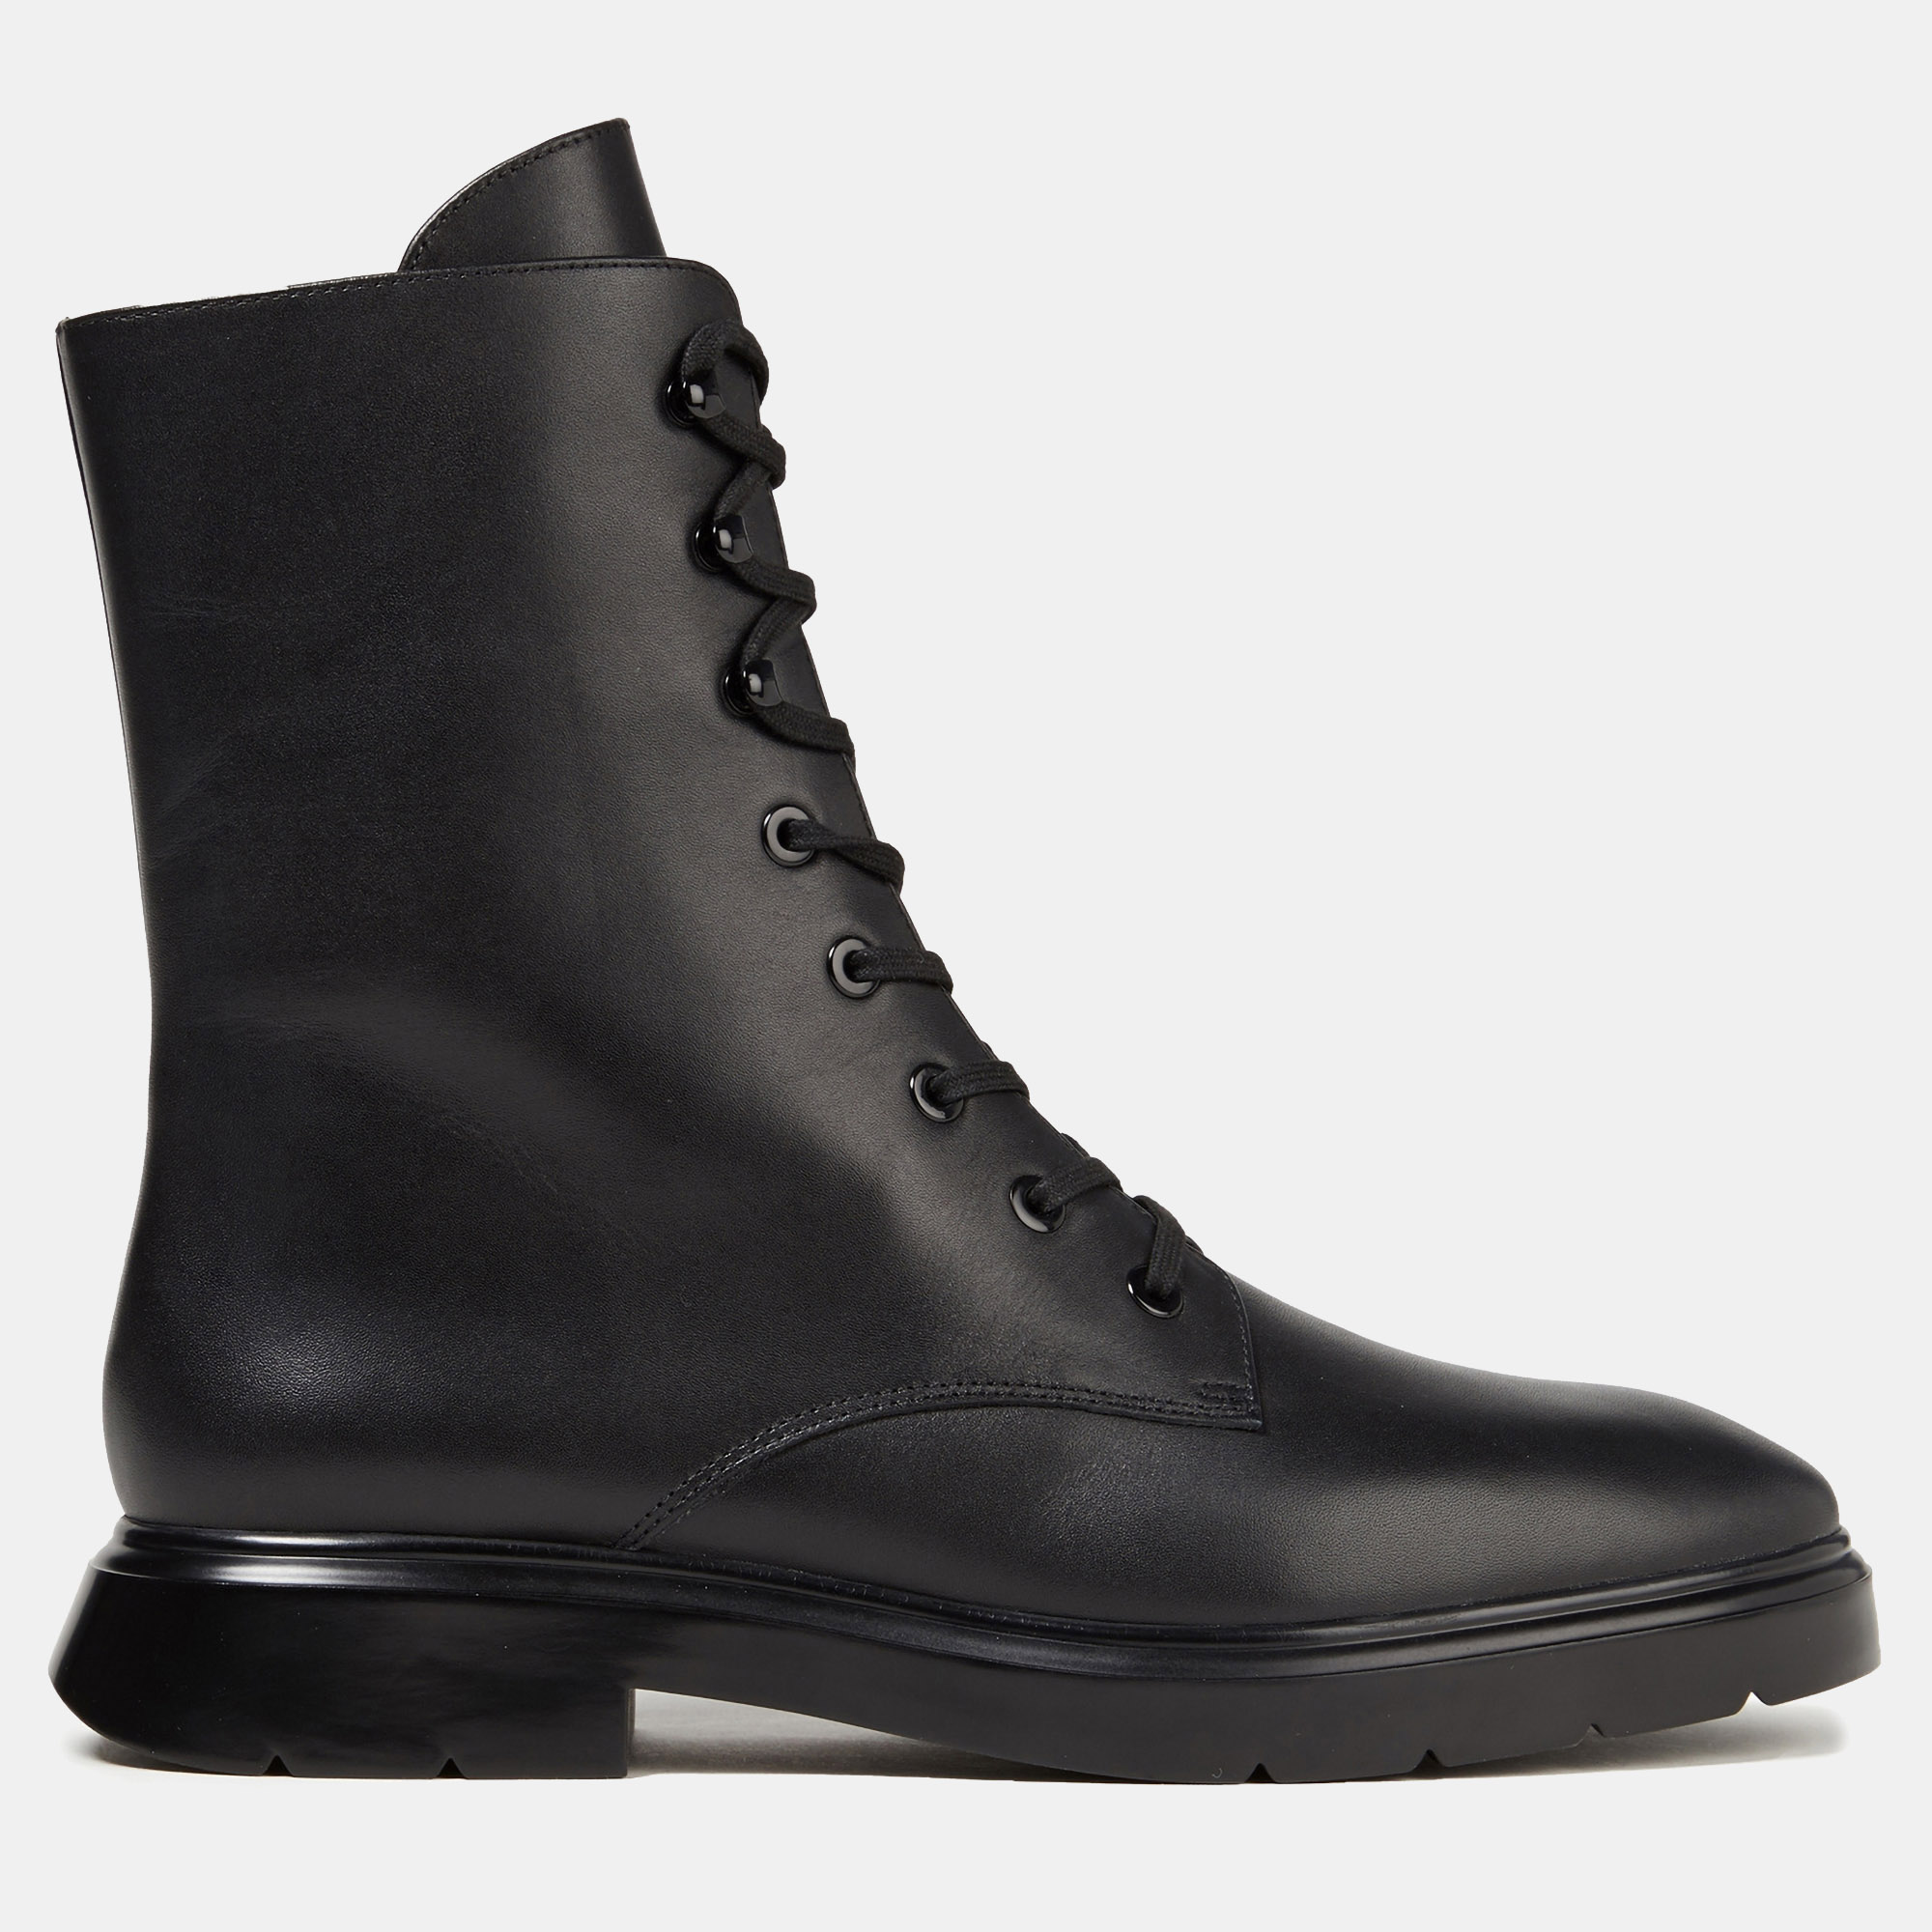 Stuart weitzman black leather ankle boots 39